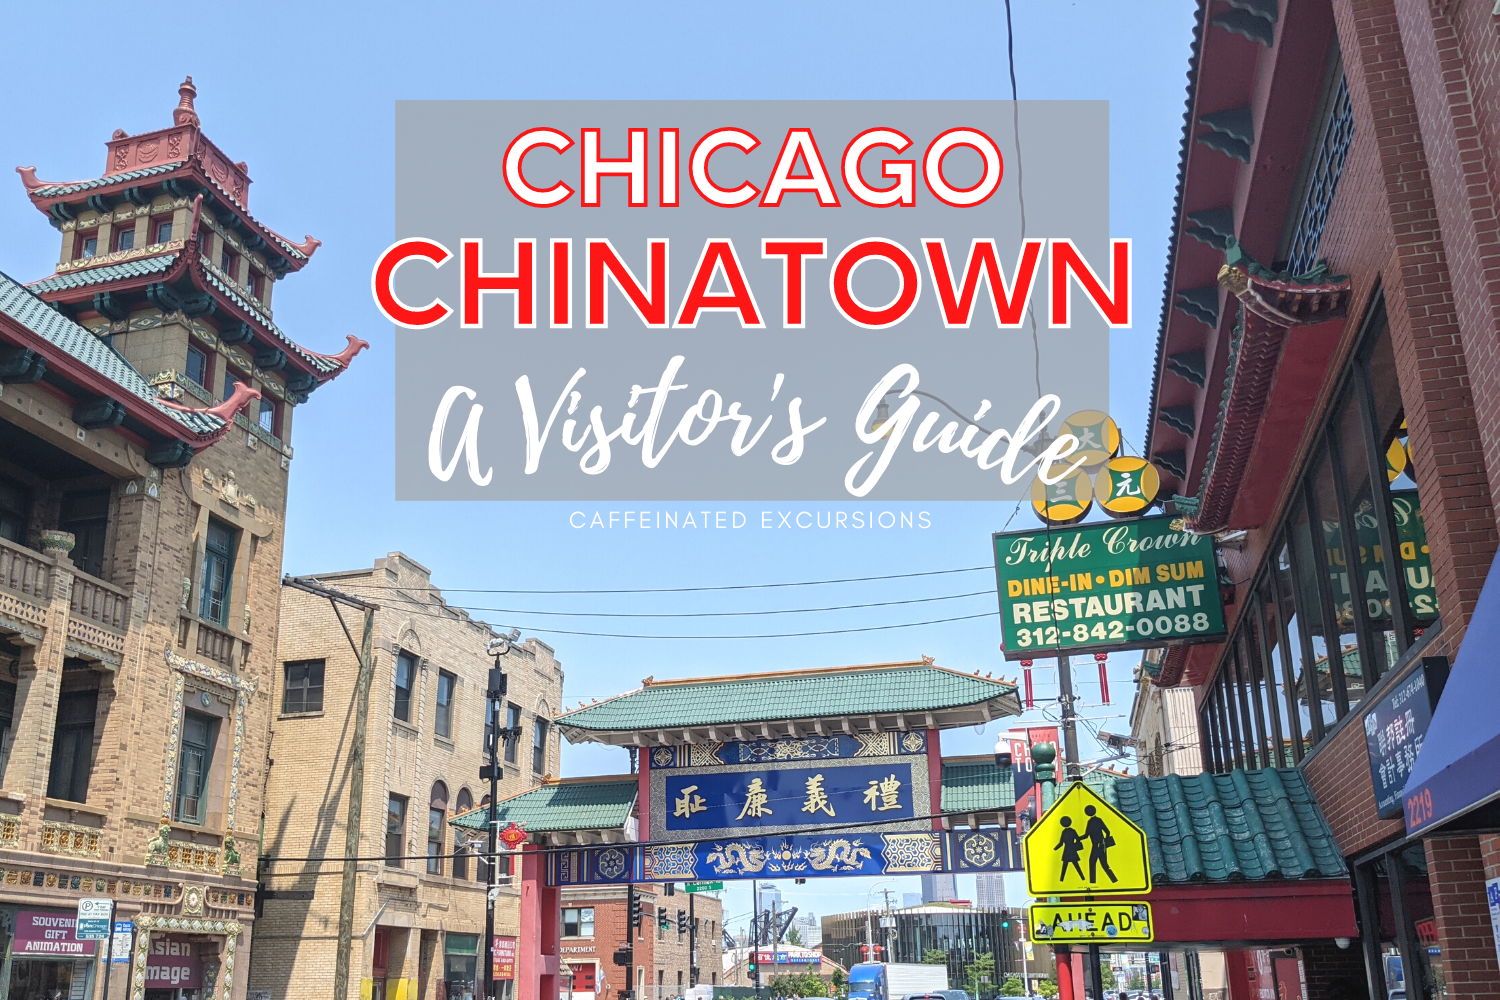 Little India, Chicago: A Neighborhood Guide - Secret Chicago